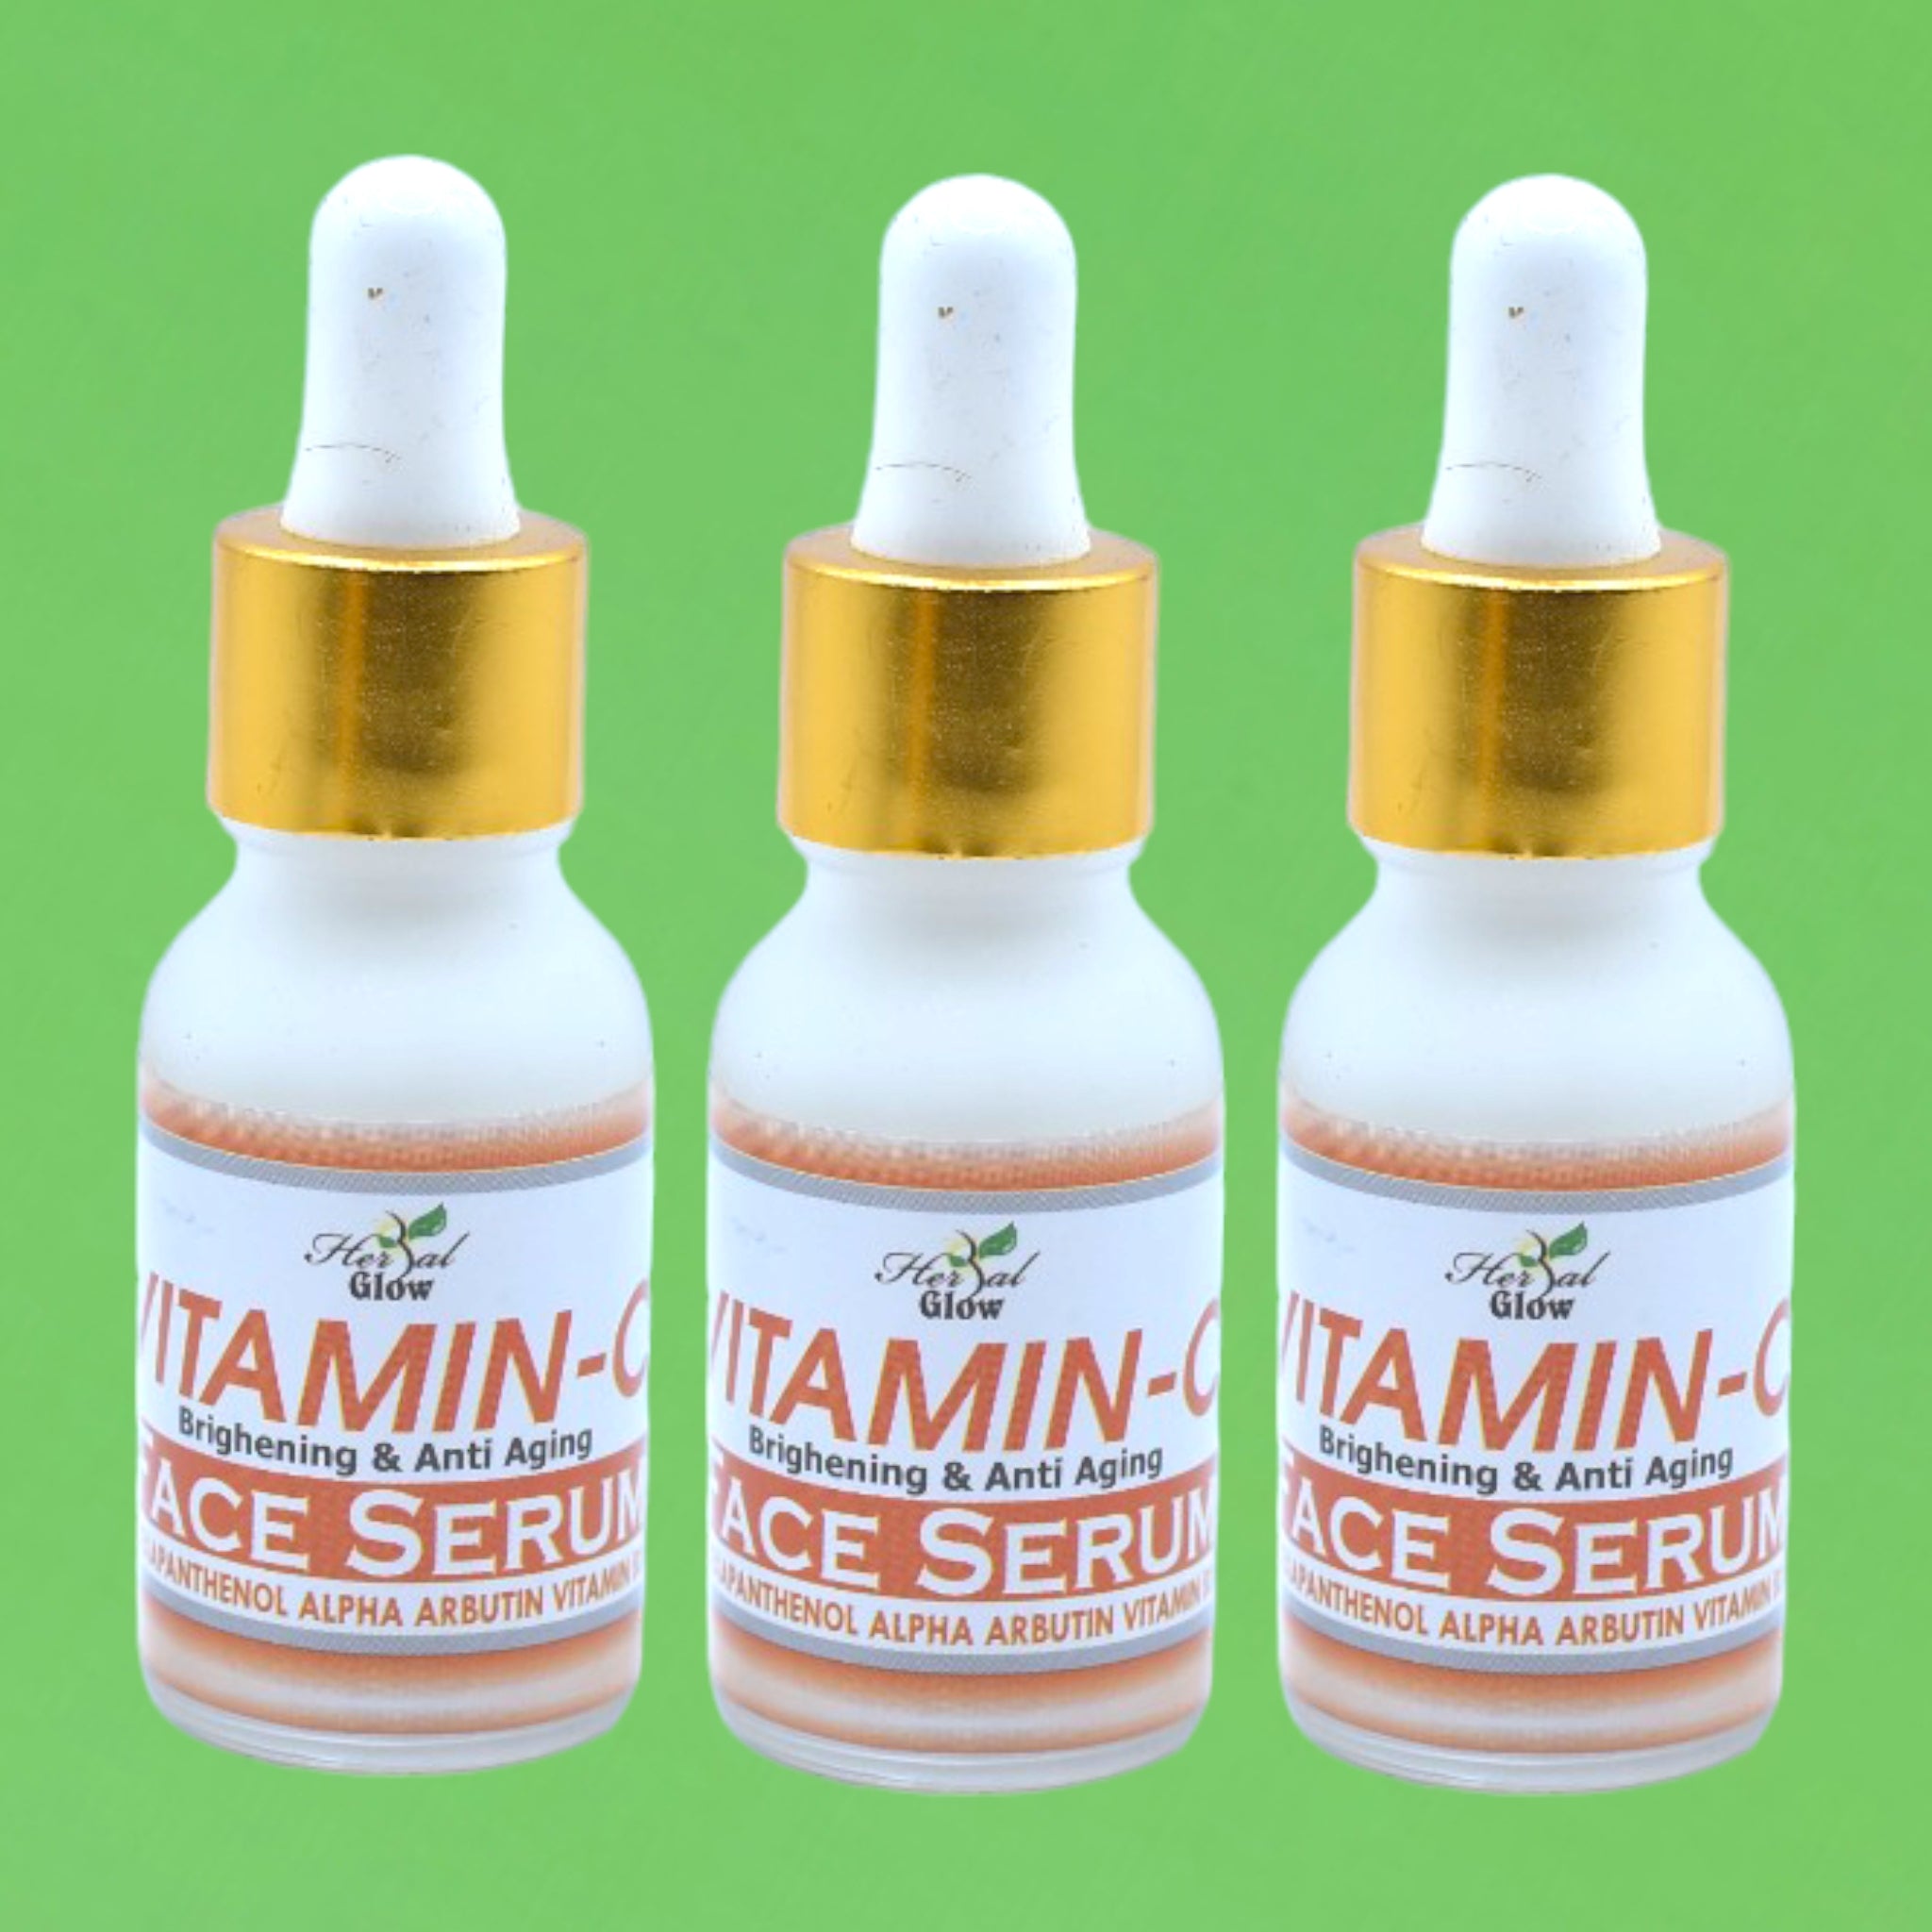 Vitamin C Face whitening Serum - Illuminate Your Skin's Natural Radiance by Herbal Glow